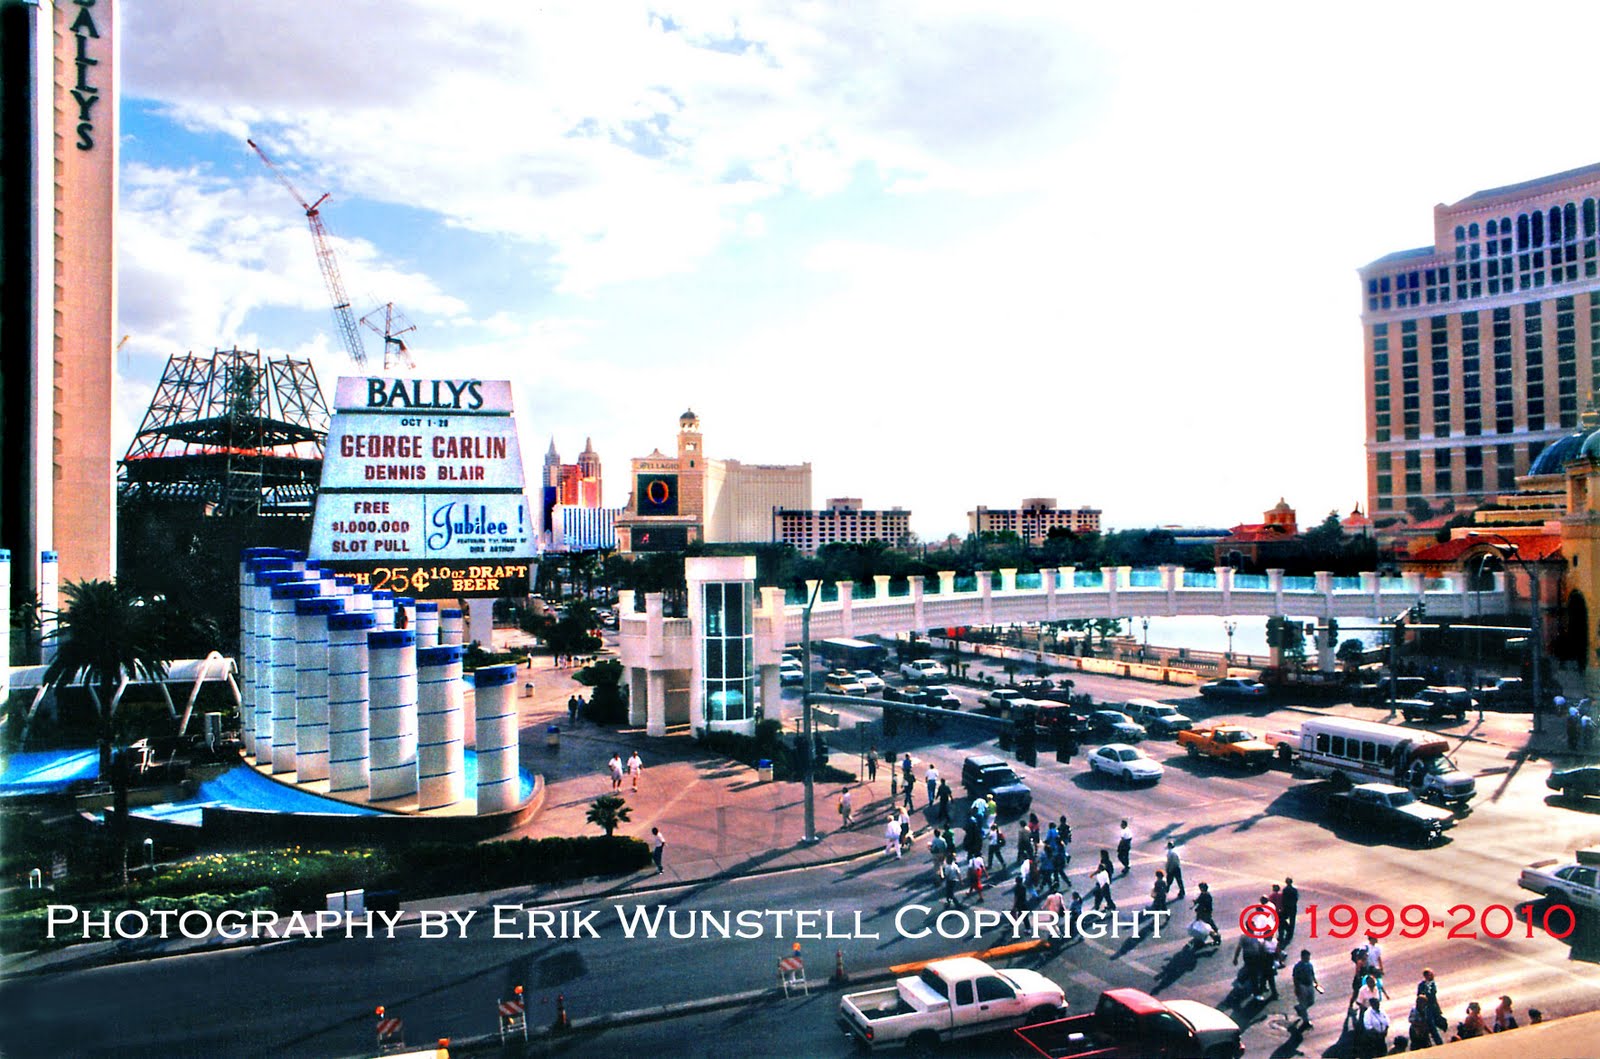 13 Dennys Las Vegas Strip Stock Photos, High-Res Pictures, and